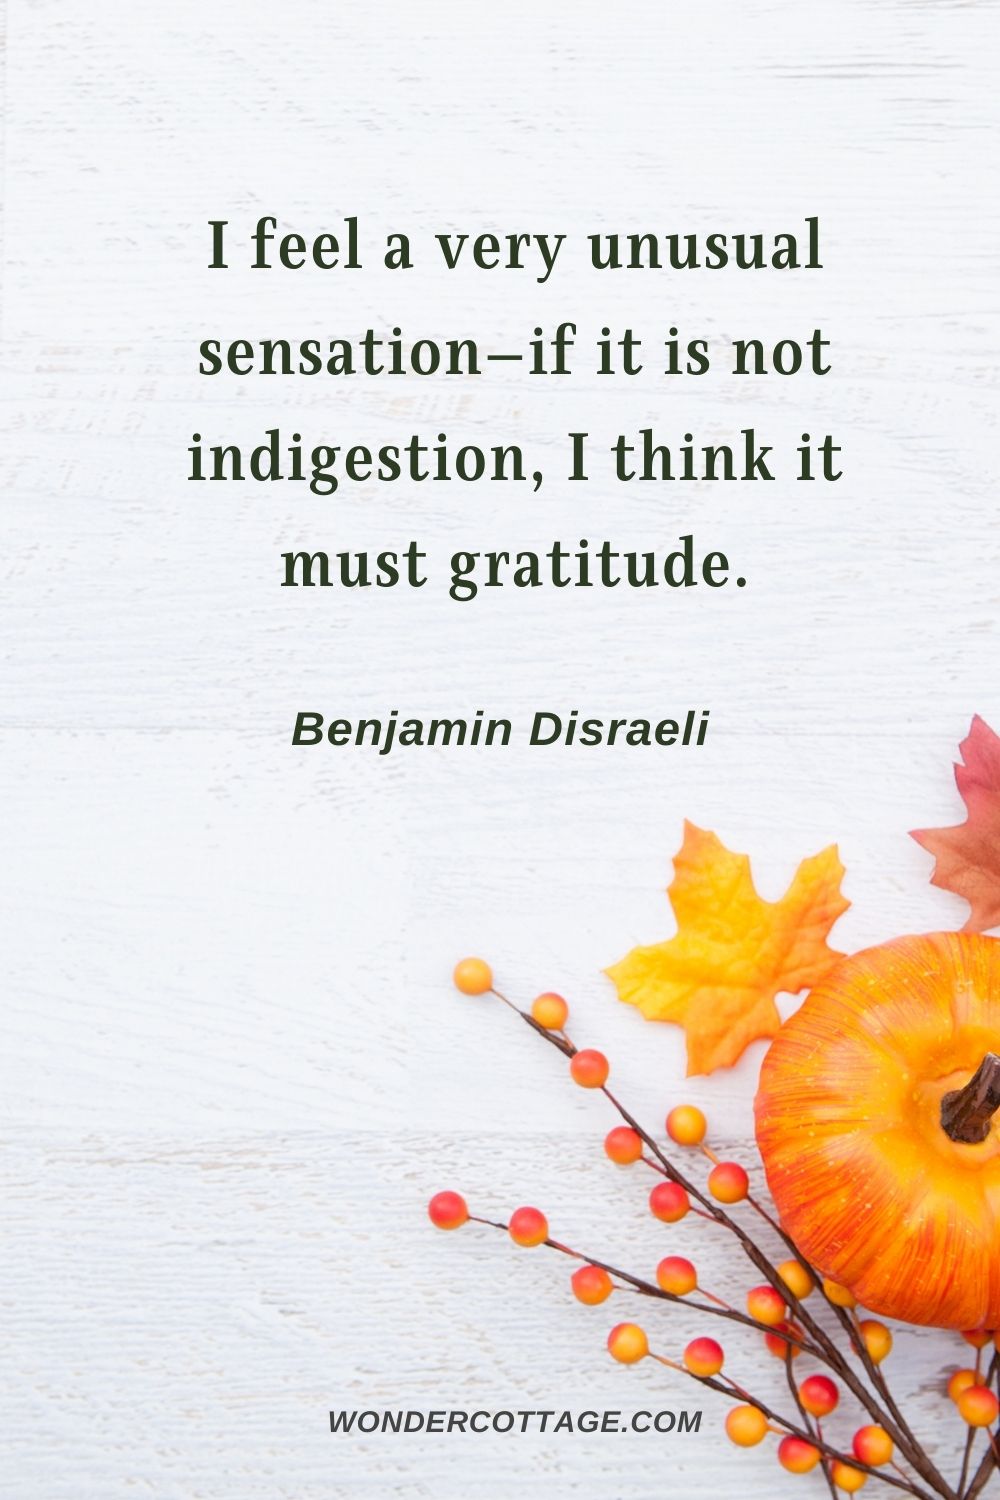 I feel a very unusual sensation—if it is not indigestion, I think it must gratitude. Benjamin Disraeli